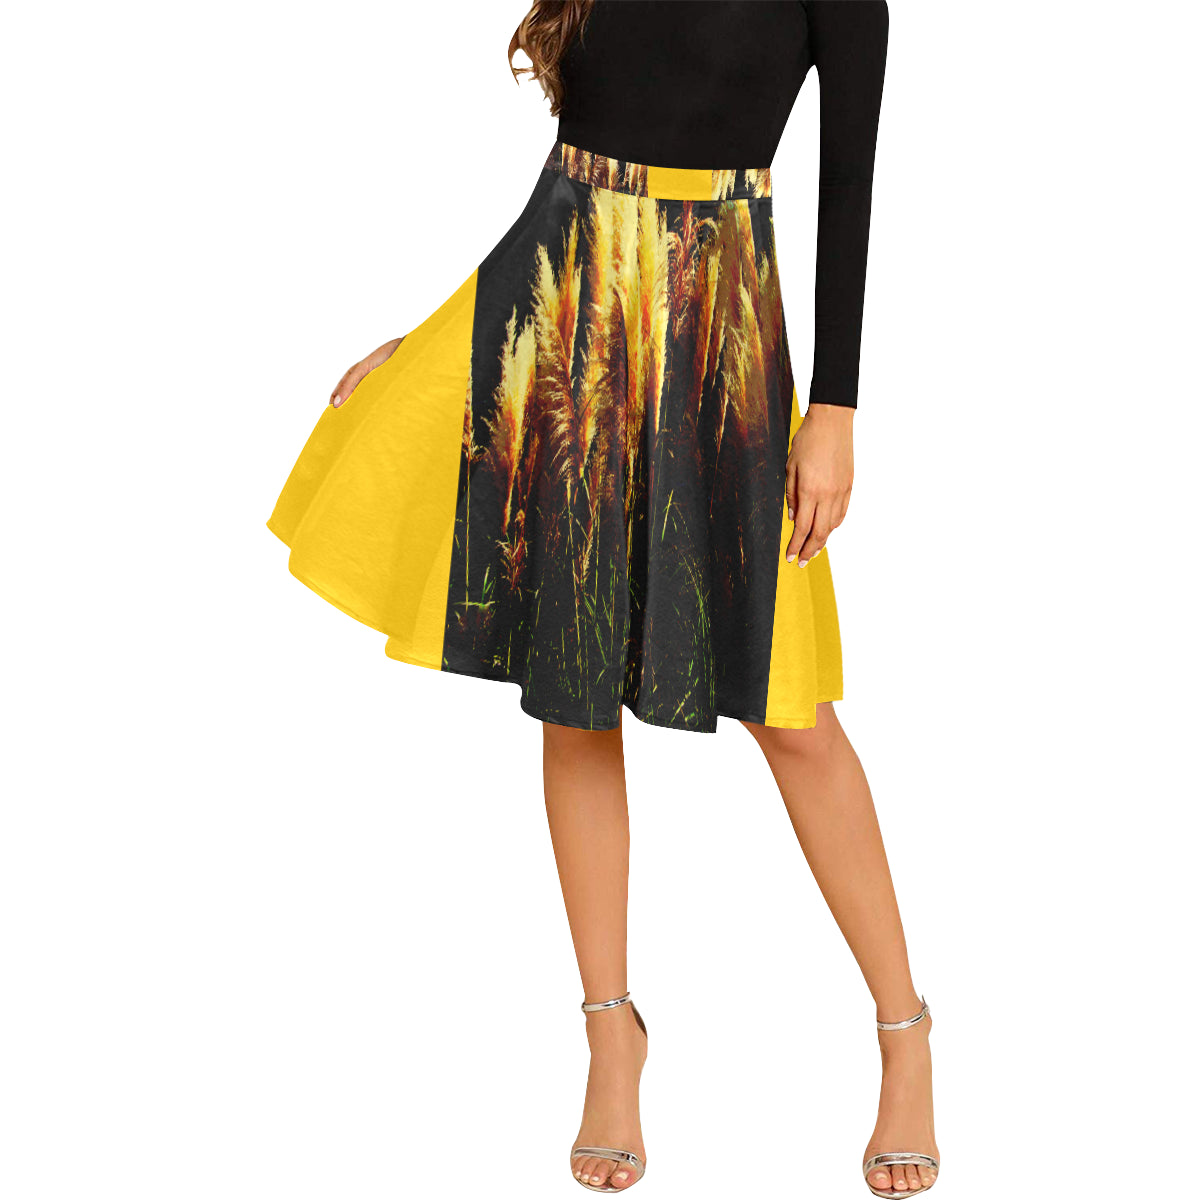 Kalent Zaiz Pleats Skirt Women's Midi Skirt  (Yellow) - Designed by Kalent Zaiz